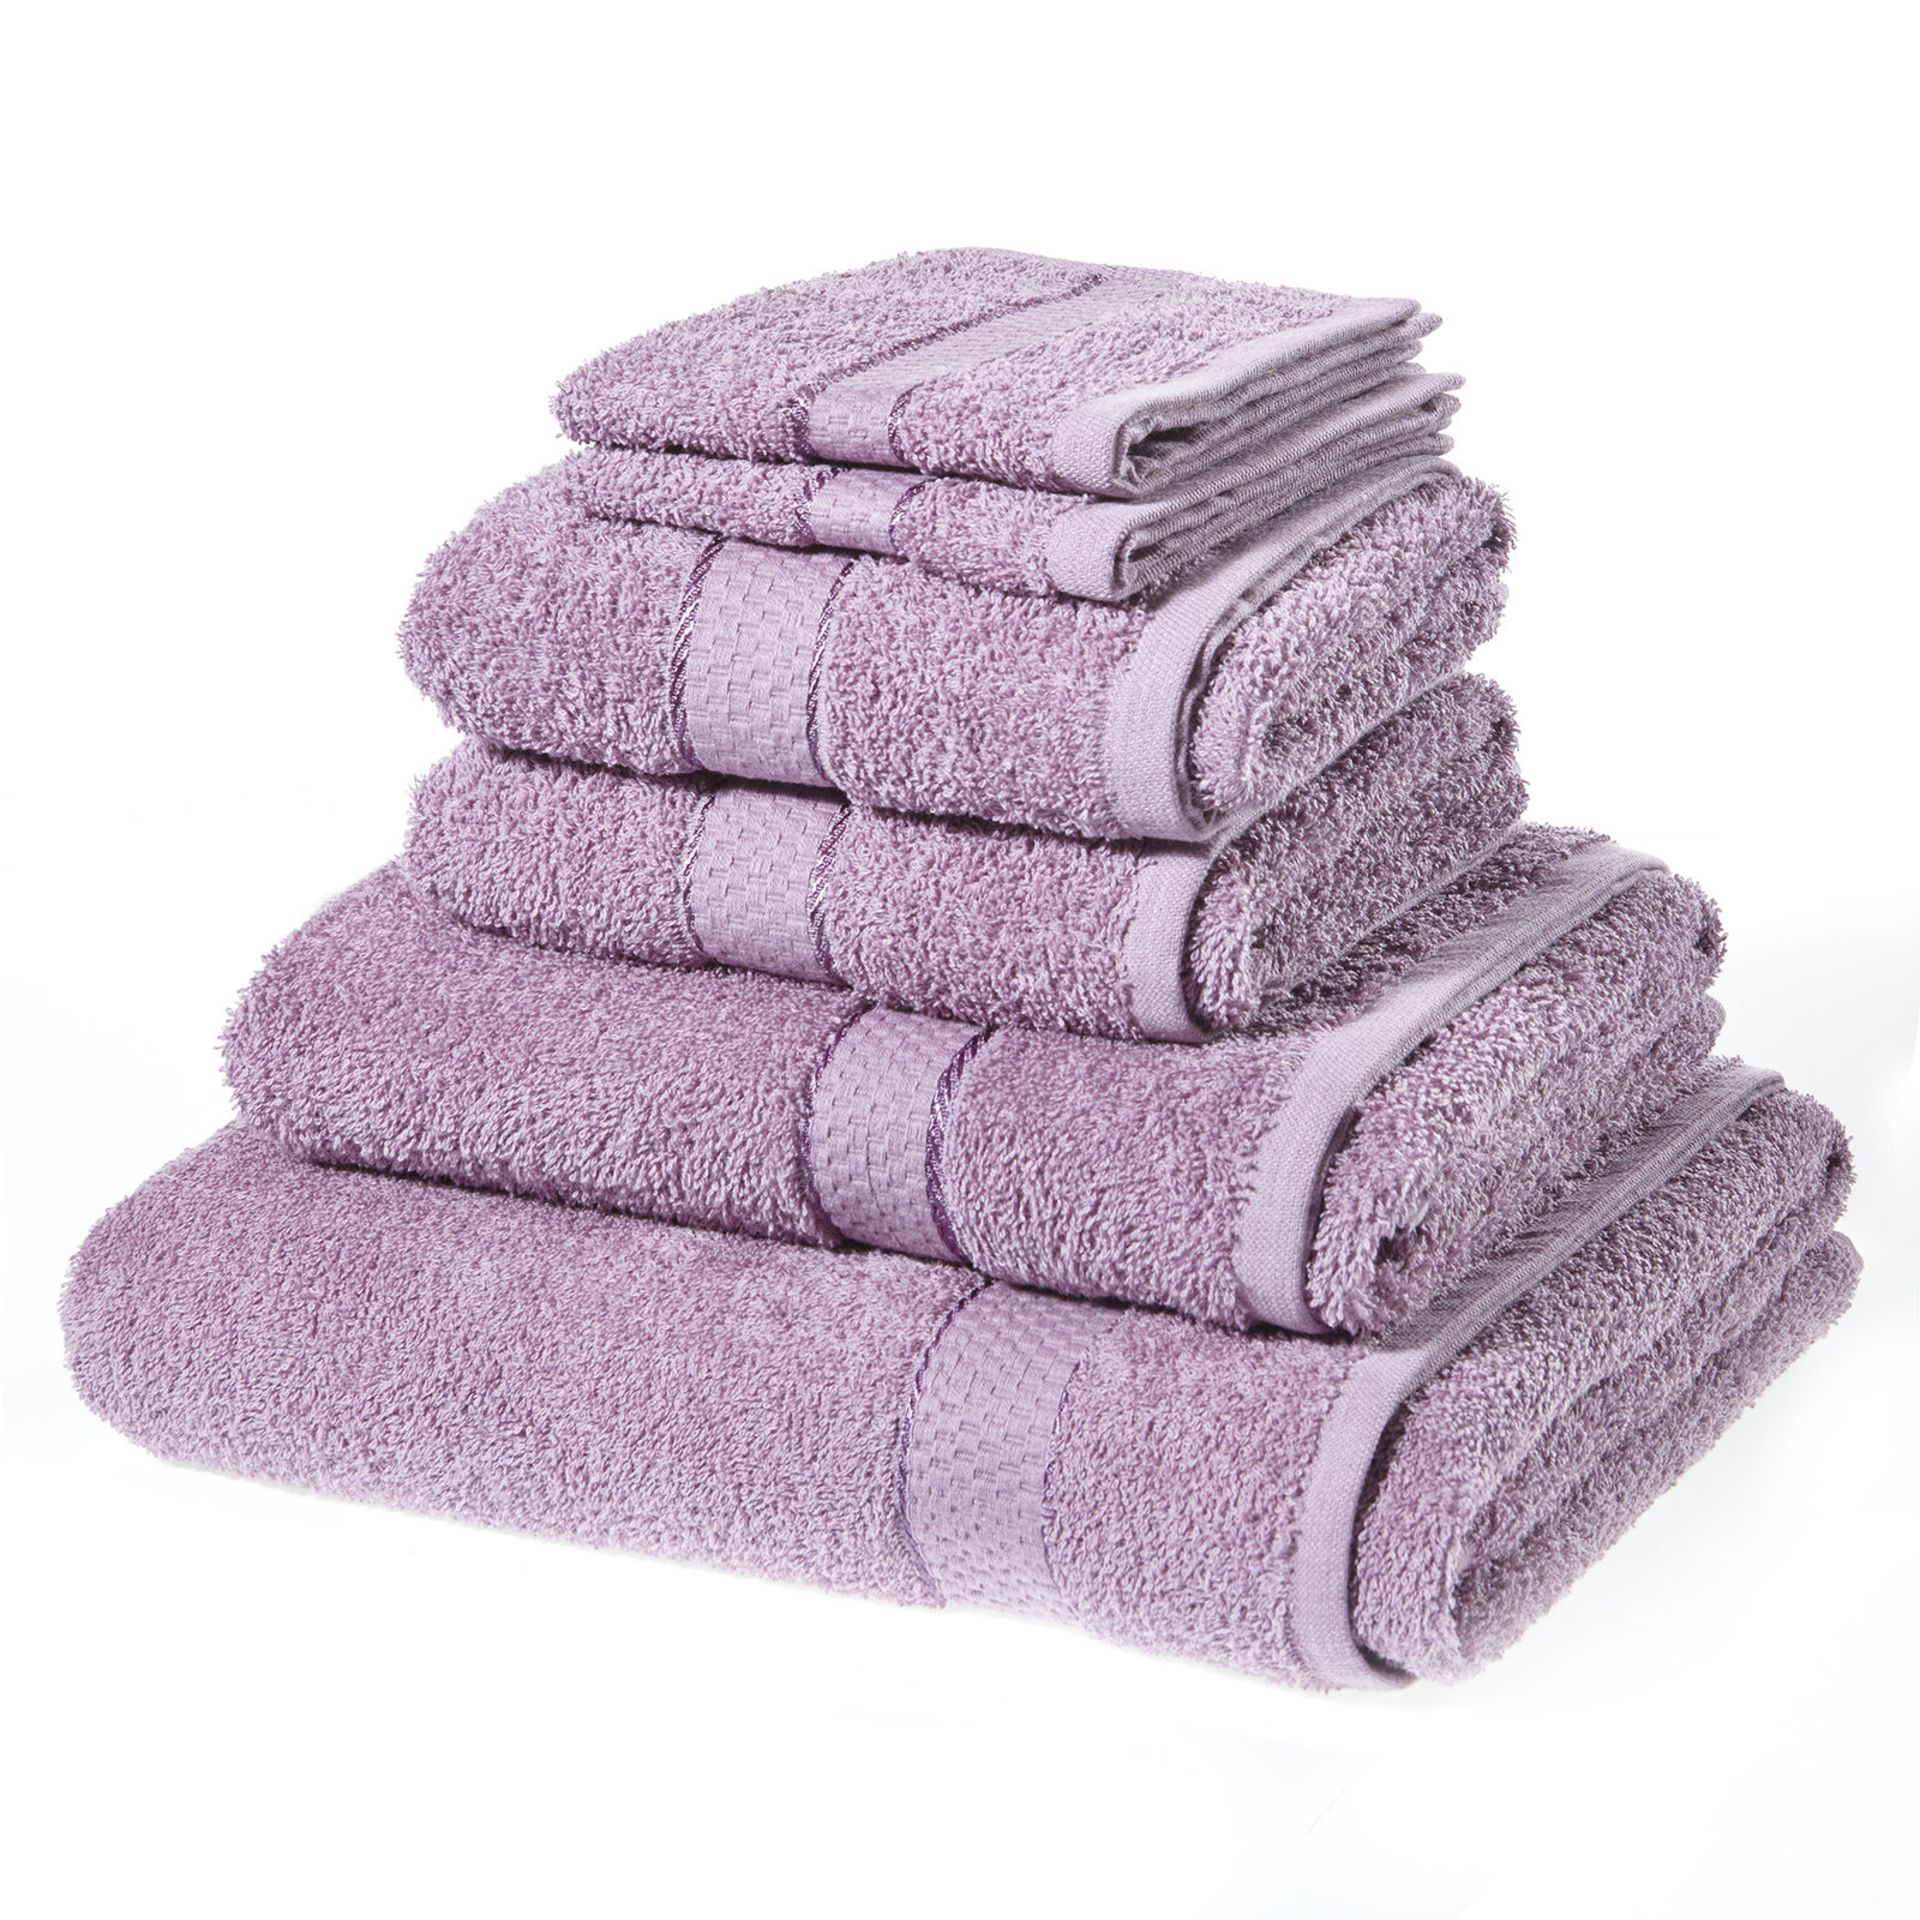 V *TRADE QTY* Brand New Mauve 6 Piece Towel Bale Set With 2 Face Towels - 2 Hand Towels - 1 Bath